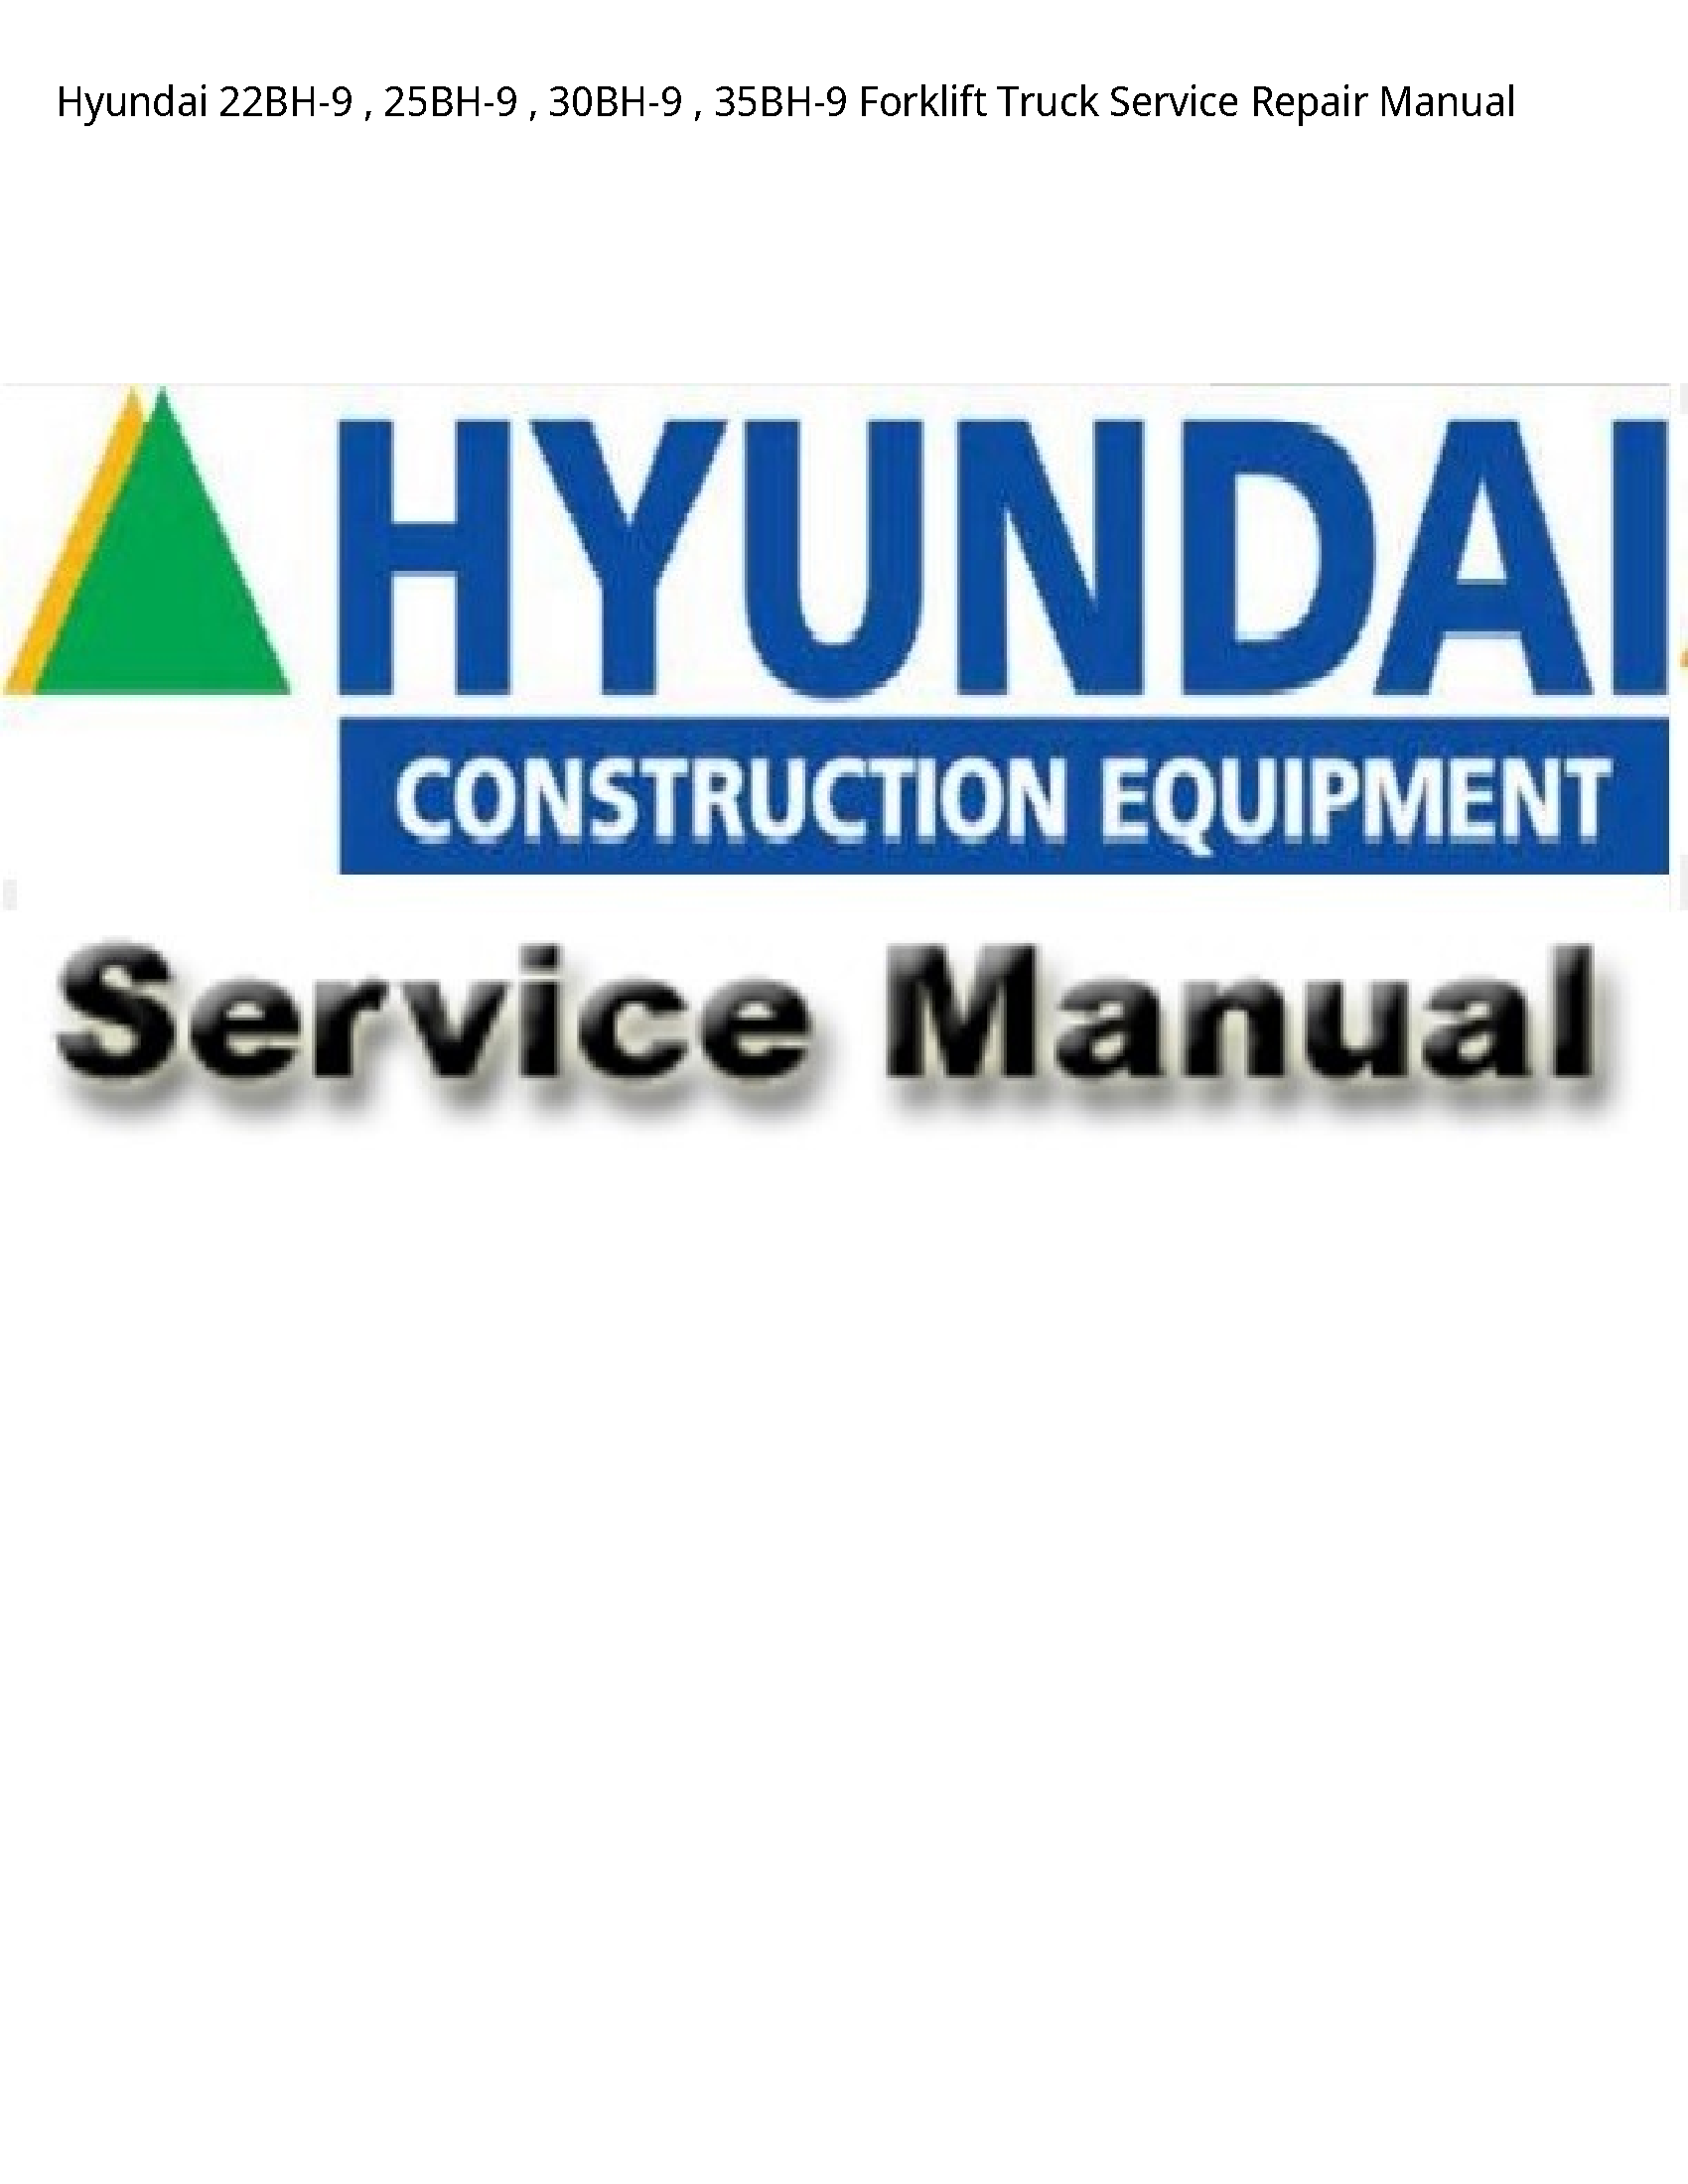 Hyundai 22BH-9 Forklift Truck manual